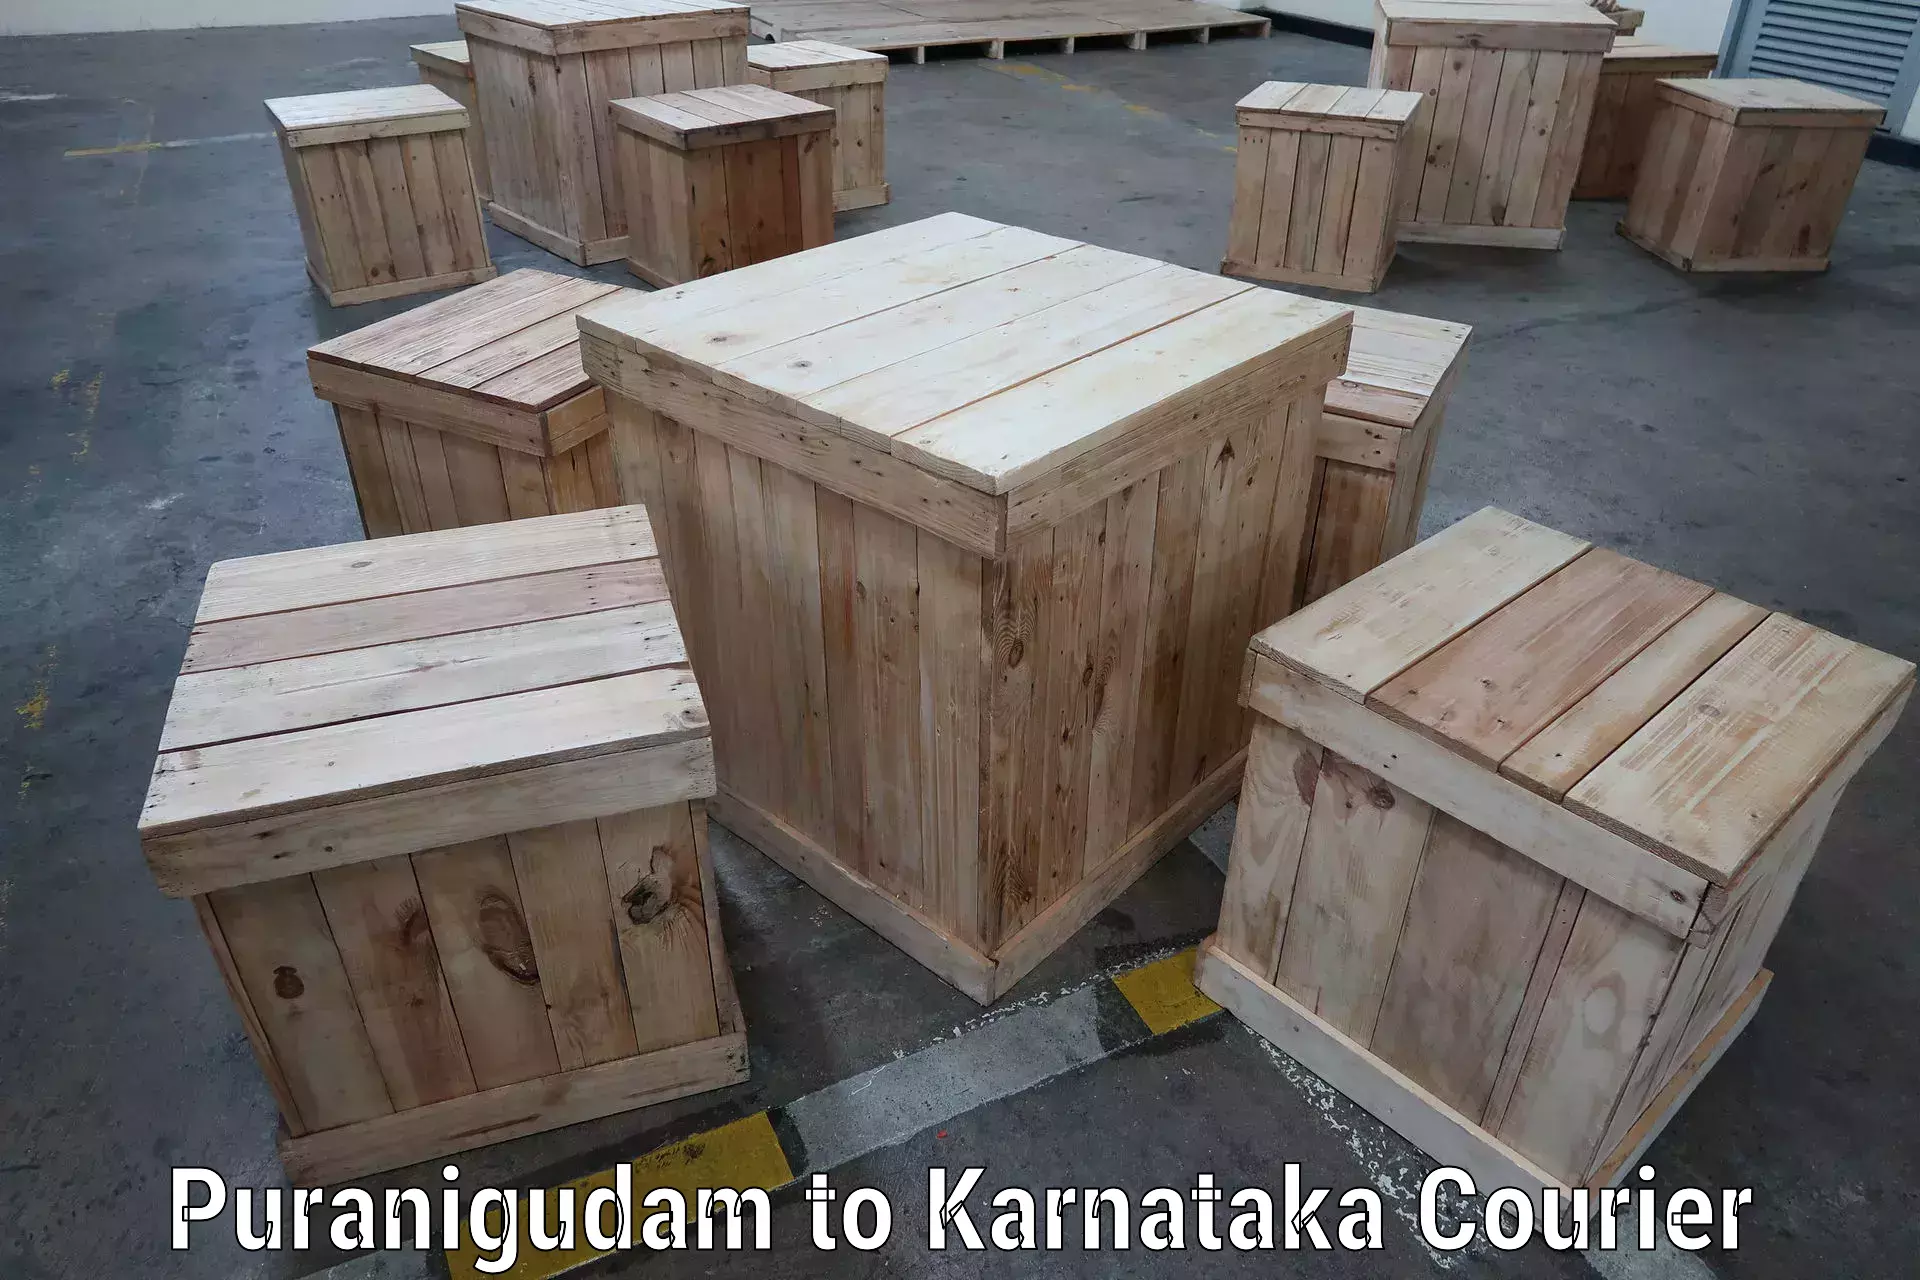 User-friendly delivery service Puranigudam to Karnataka